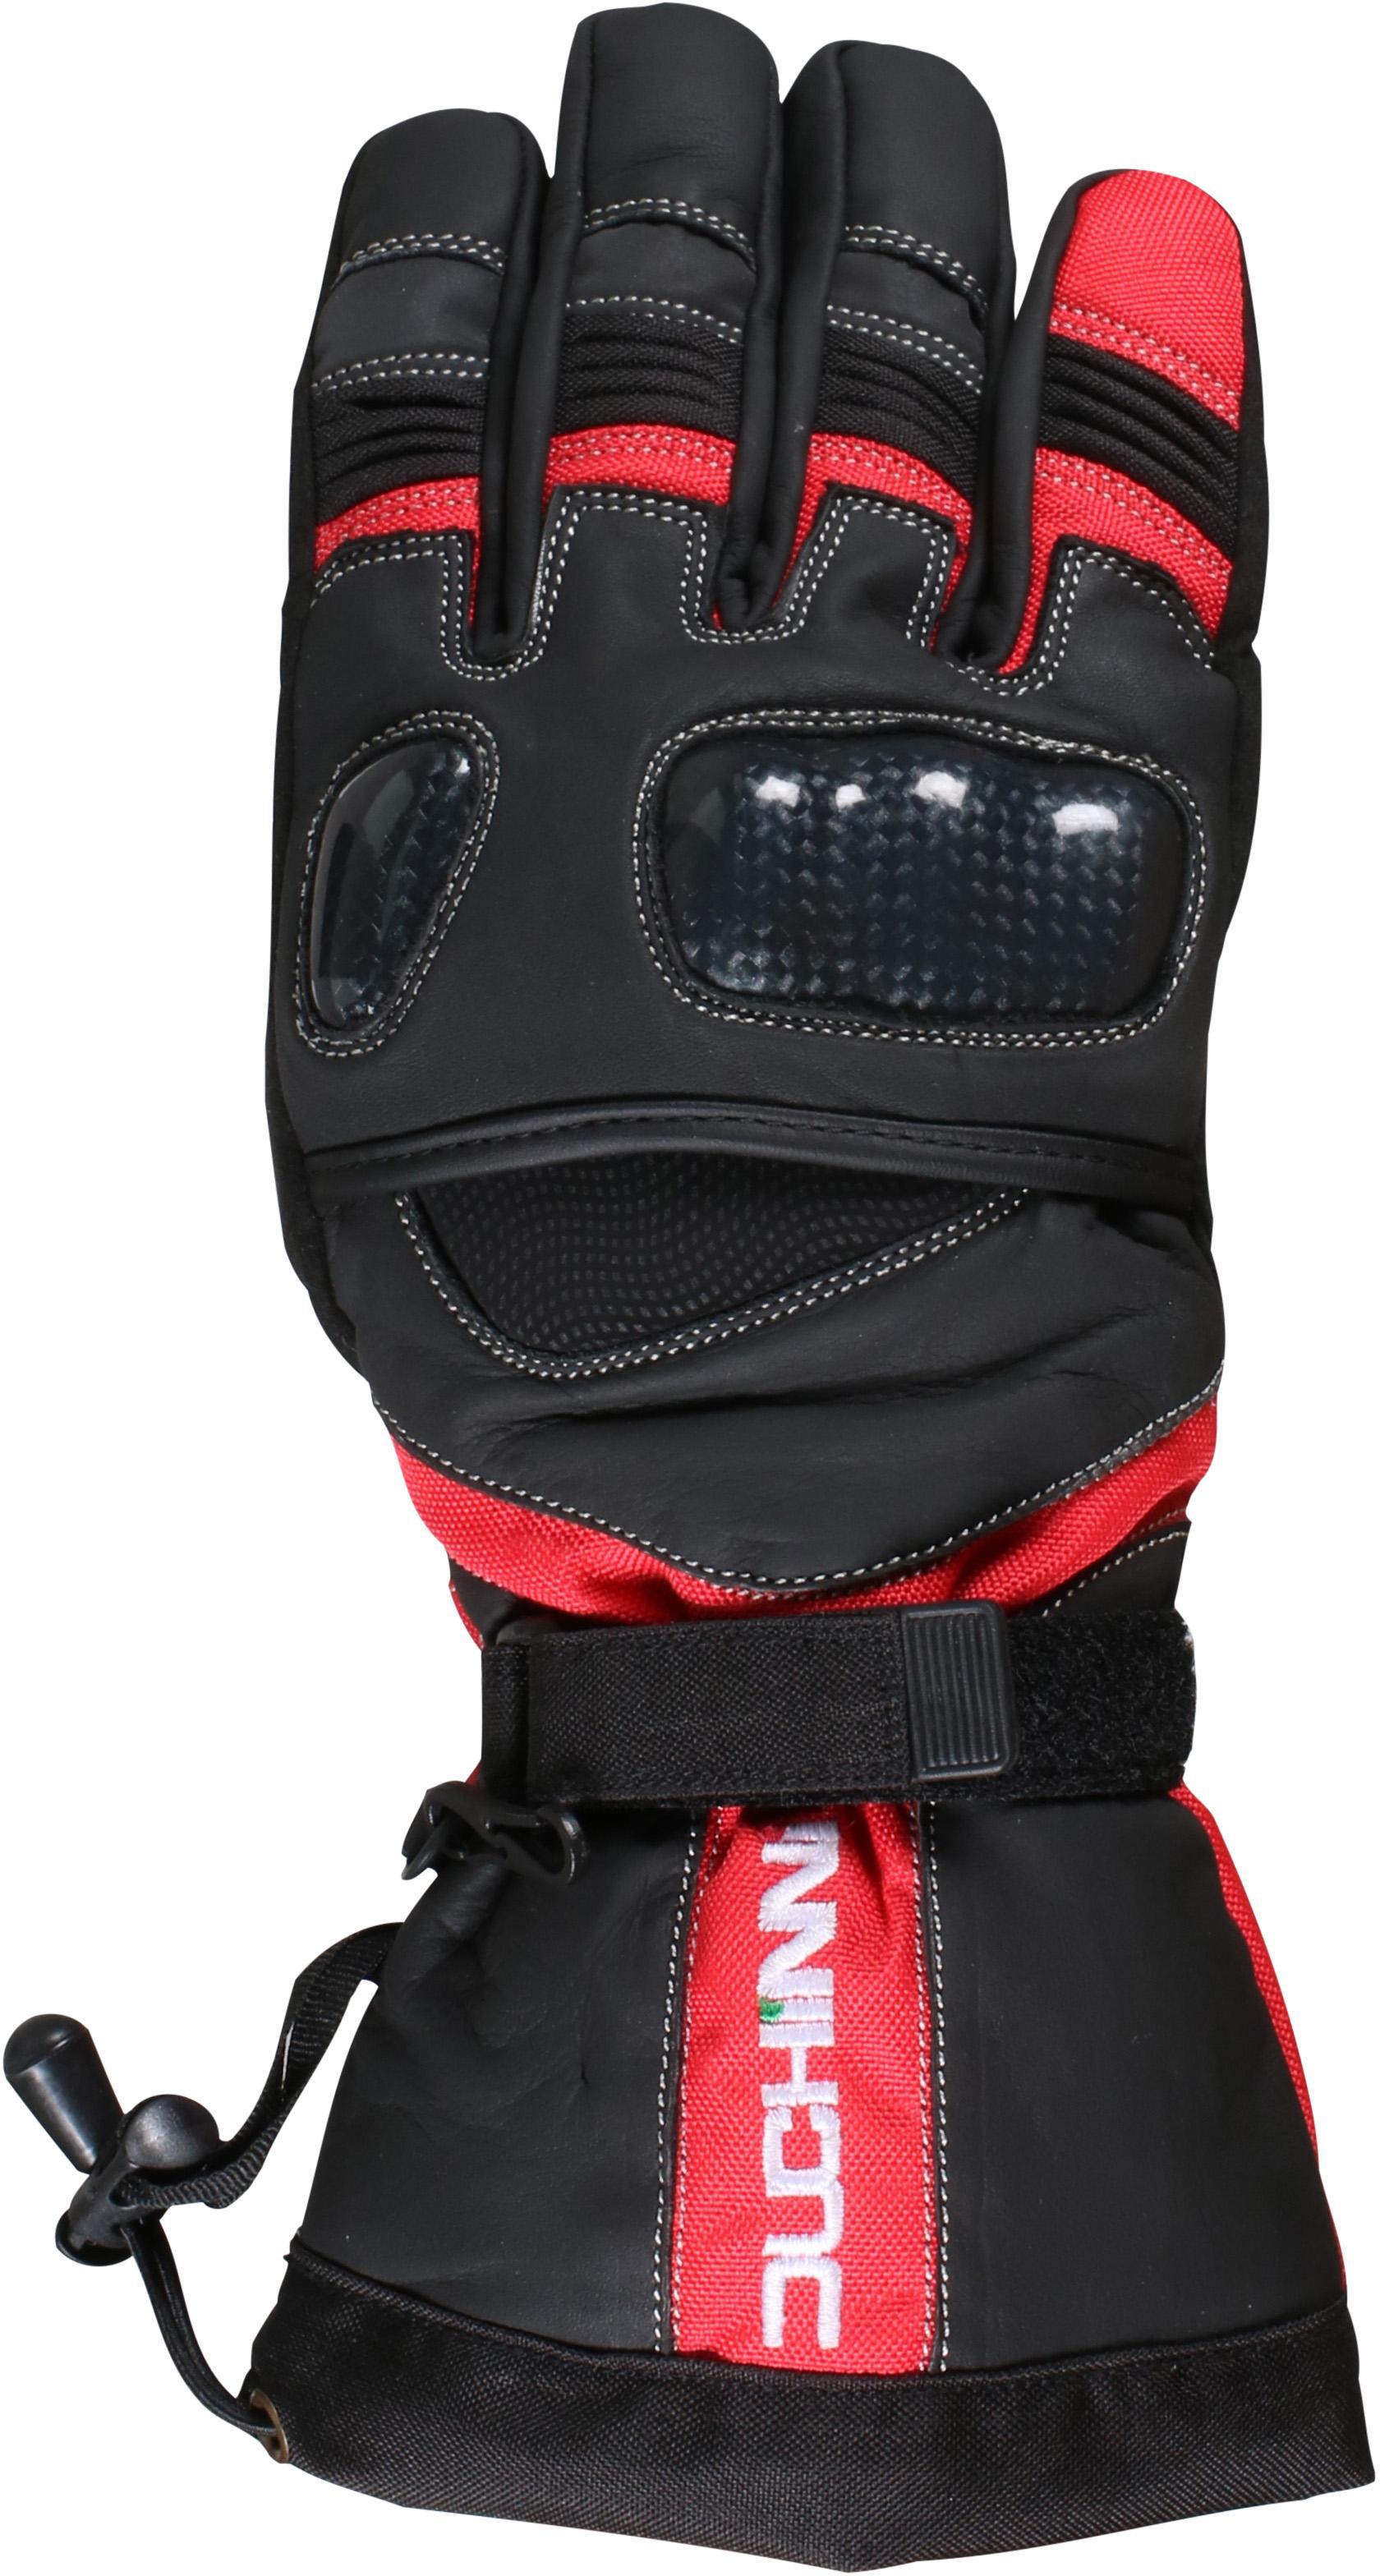 Duchinni Yukon Motorcycle Gloves - Black And Red, 3Xl